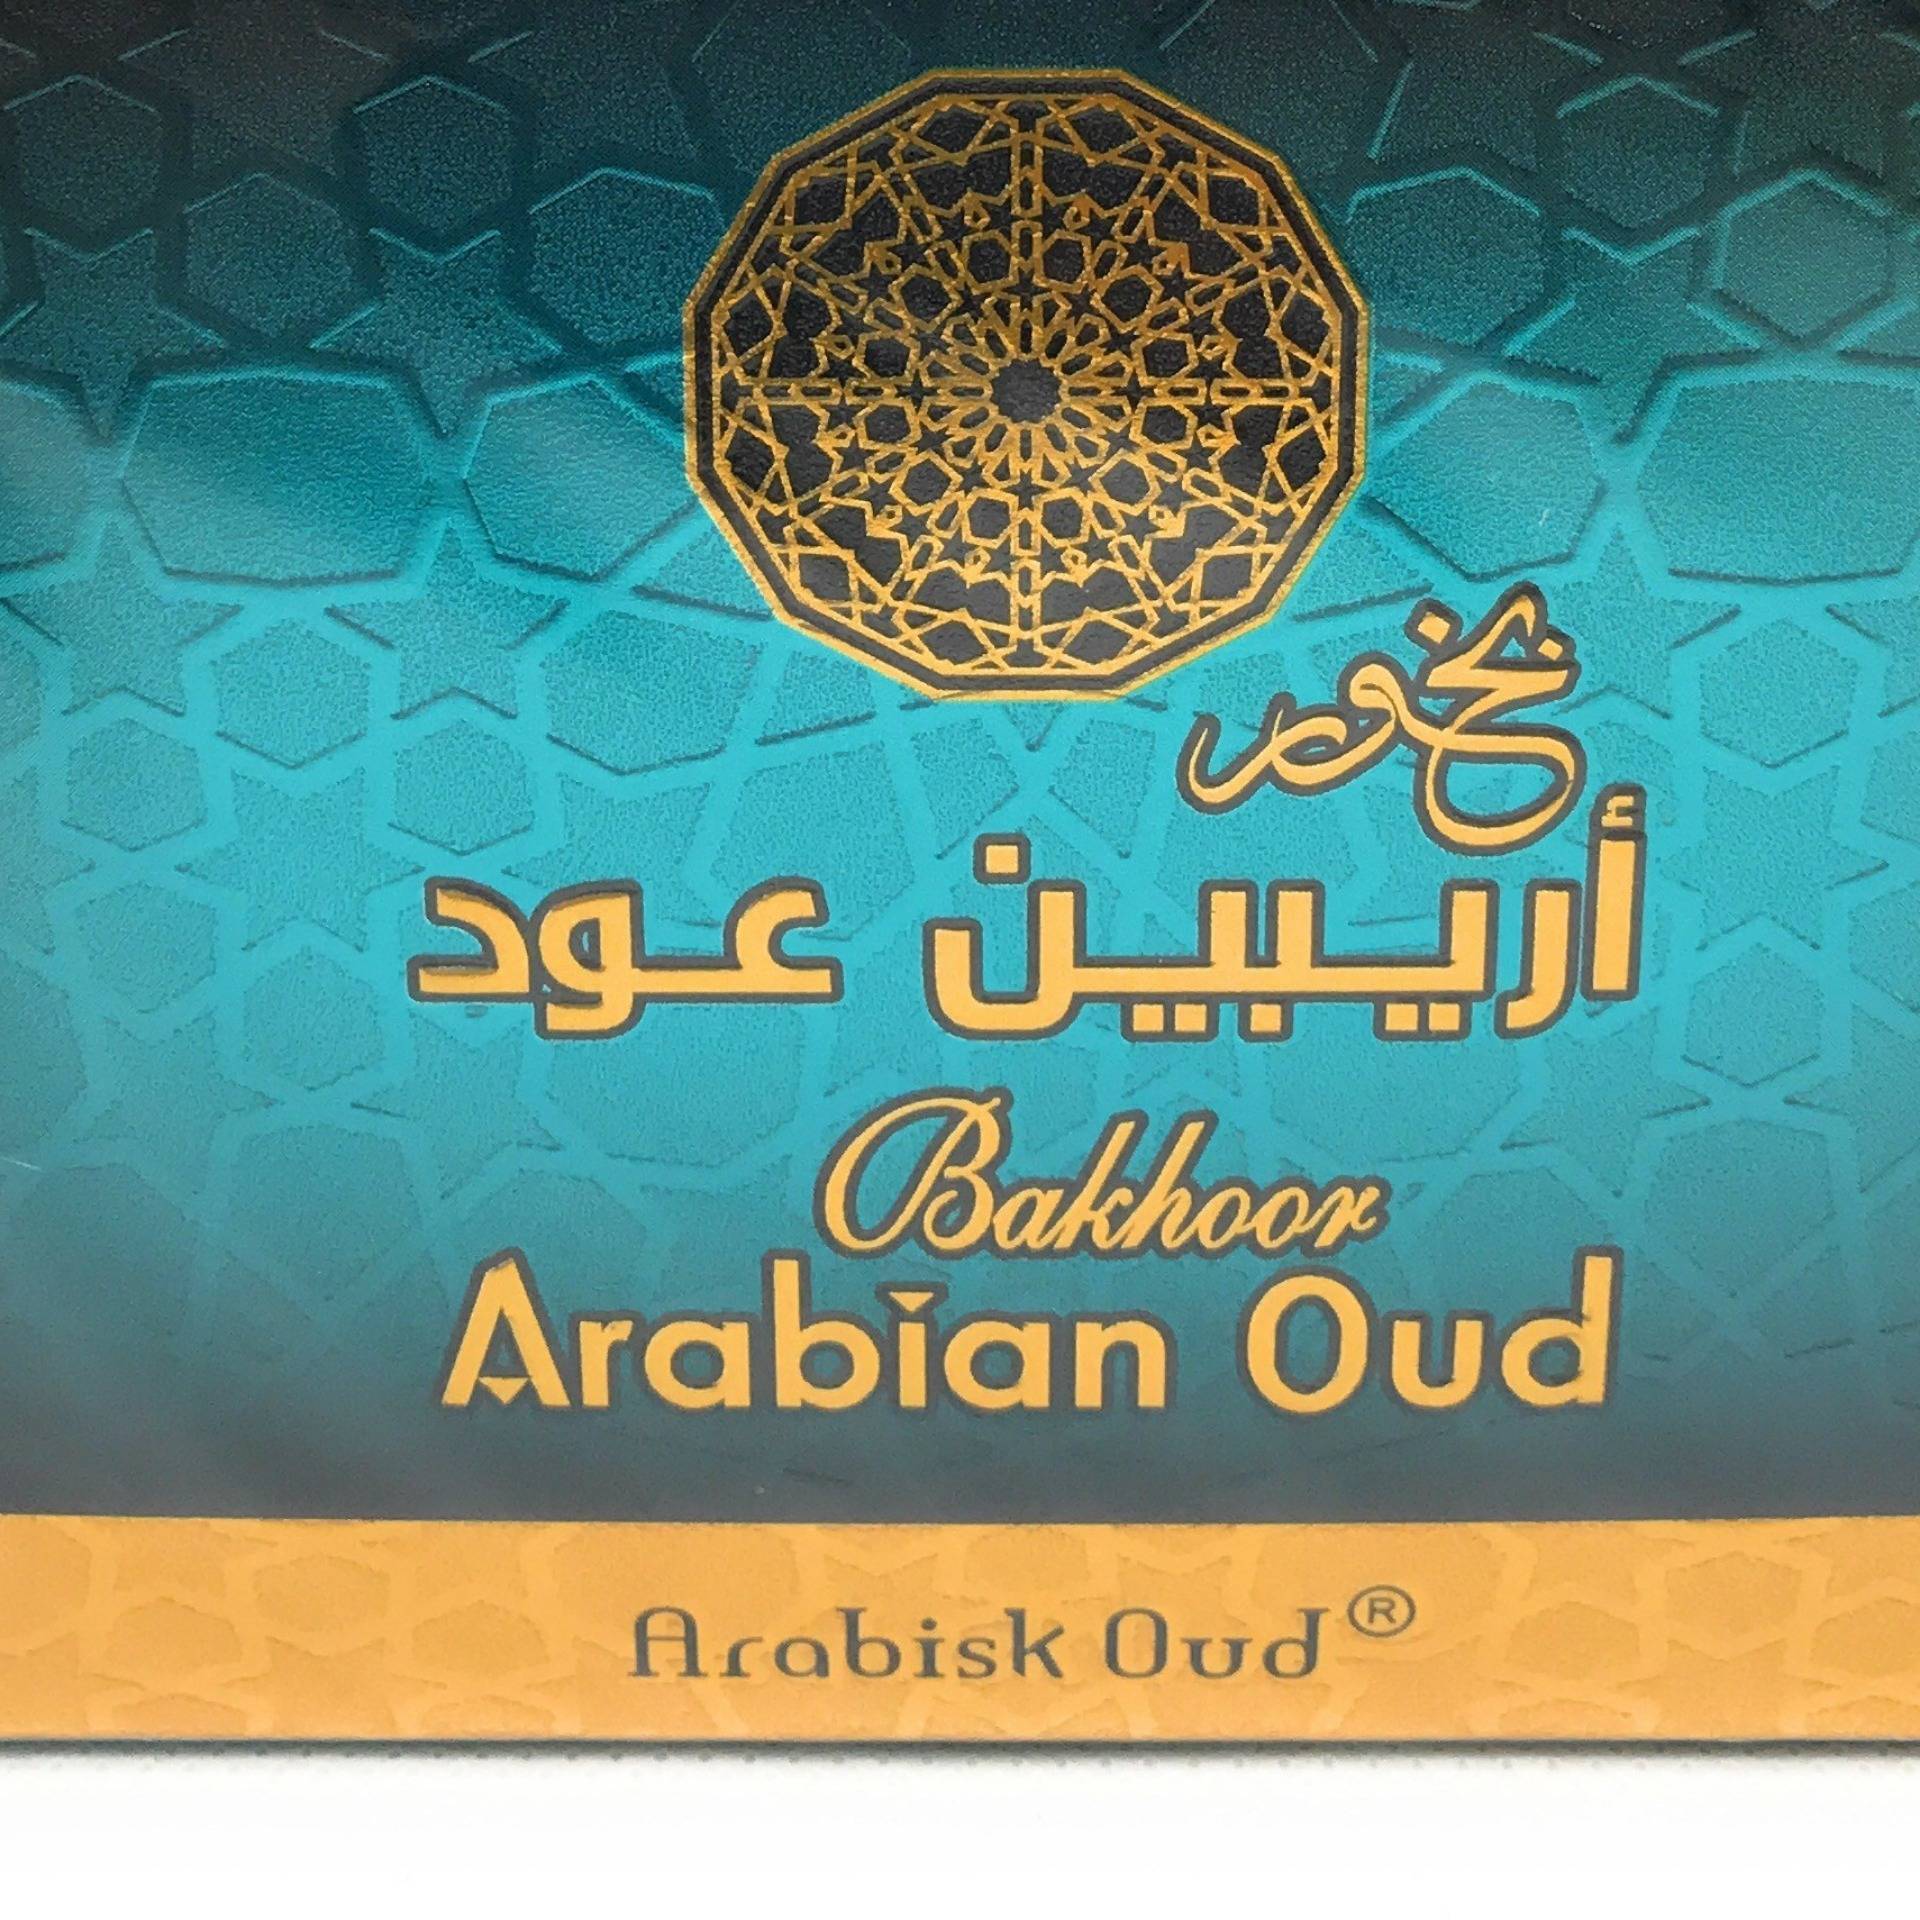 Bakhoor Arabian Oud 70 Gms Arabisk Oud - Leyjao.pk